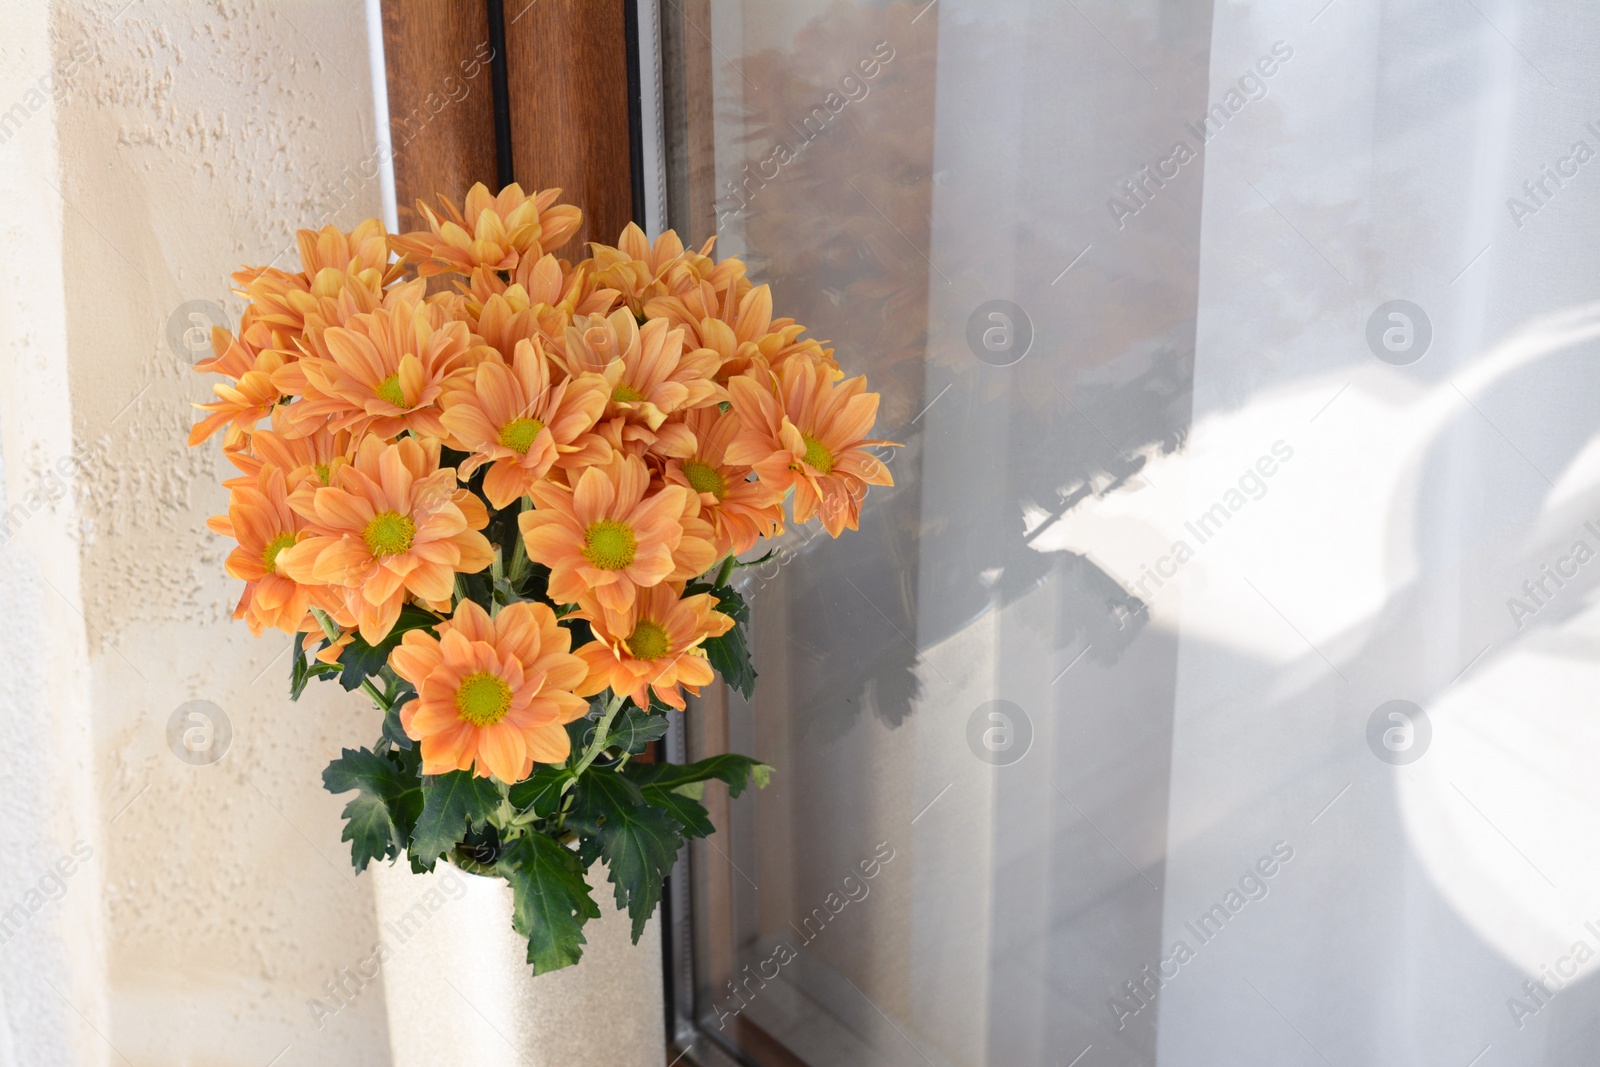 Photo of Bouquet of beautiful chrysanthemum flowers in vase near window outdoors